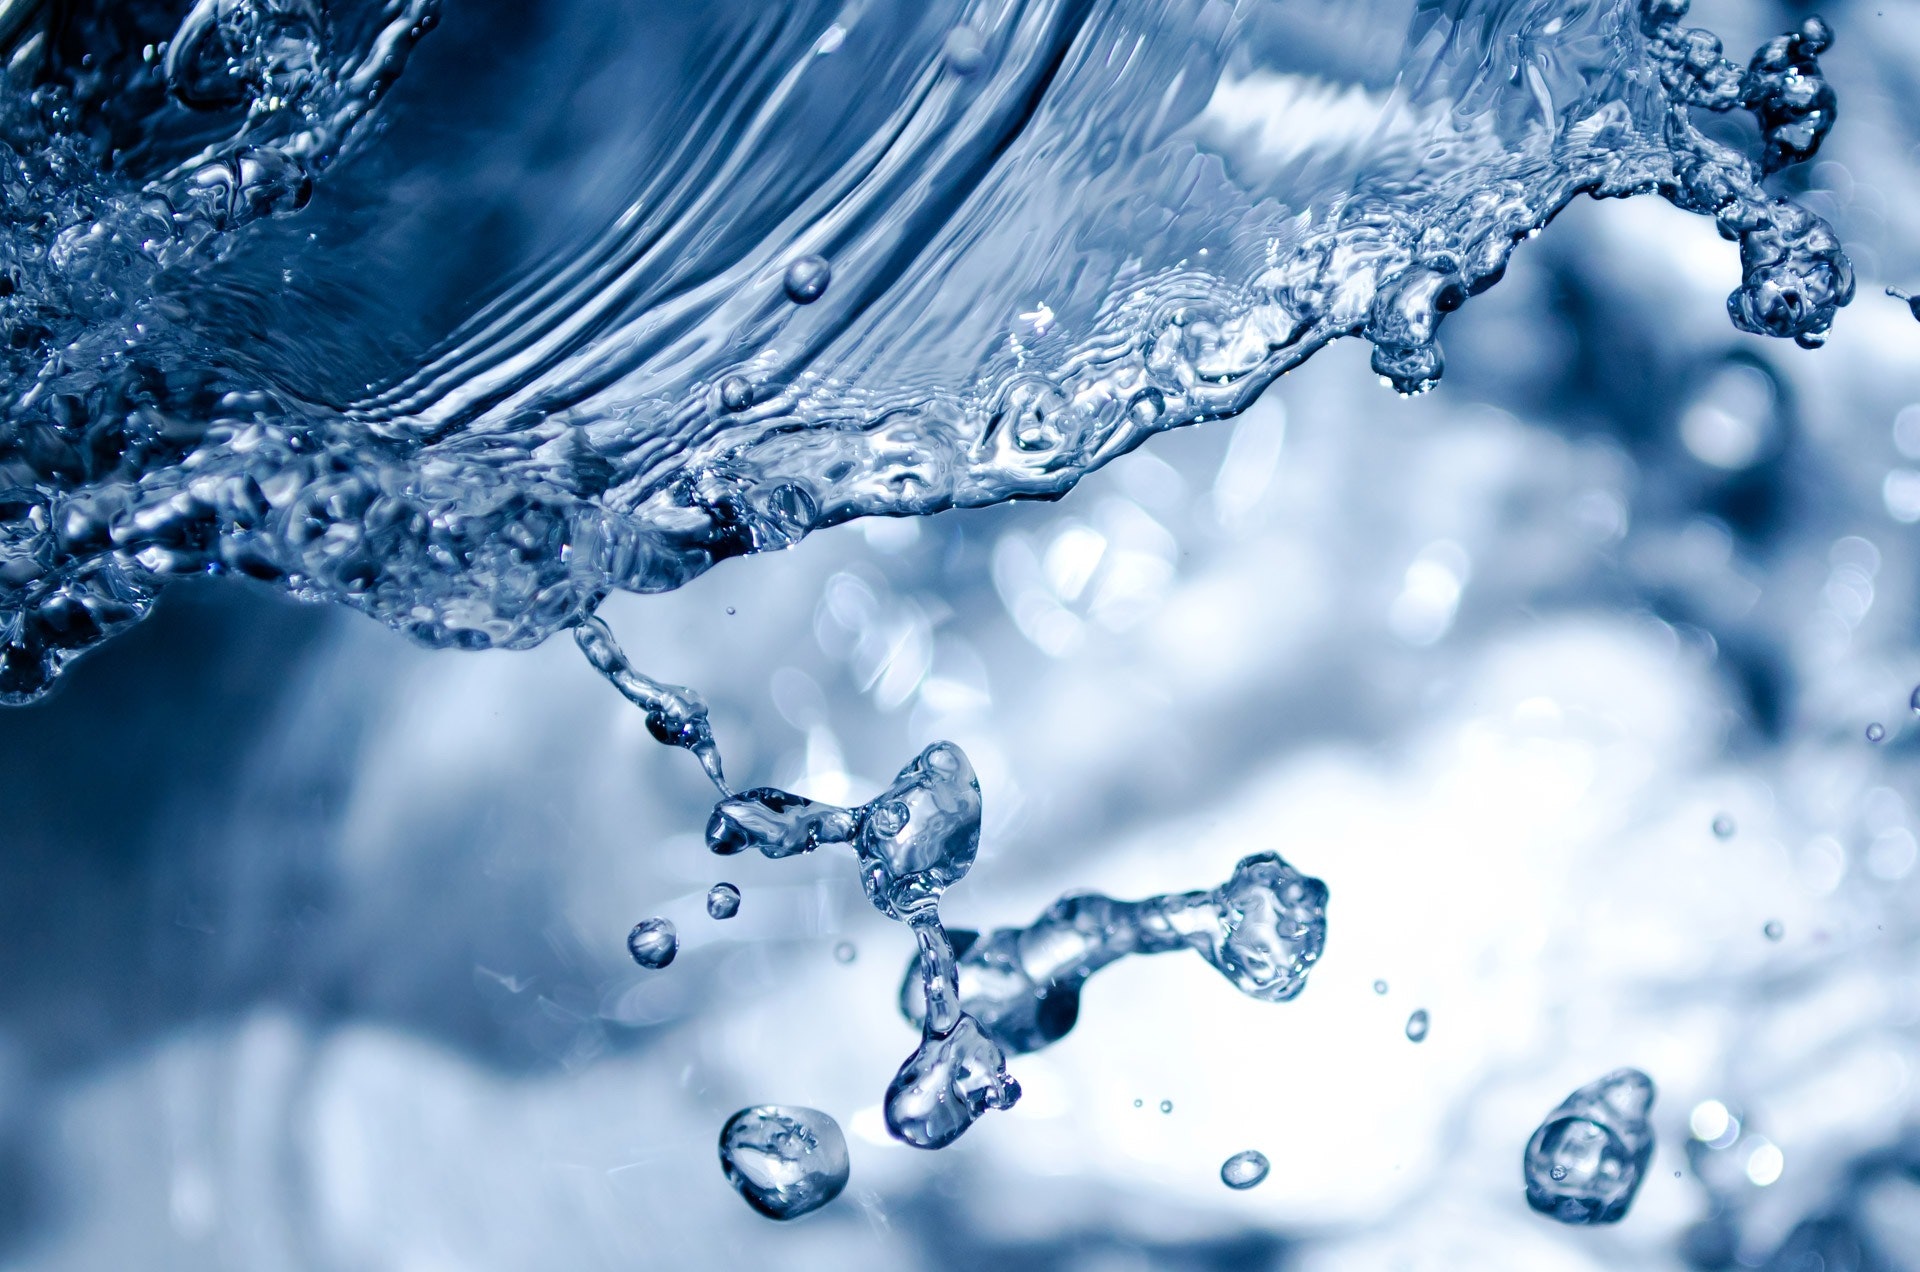 1000+ Interesting Water Splash Photos · Pexels · Free Stock Photos